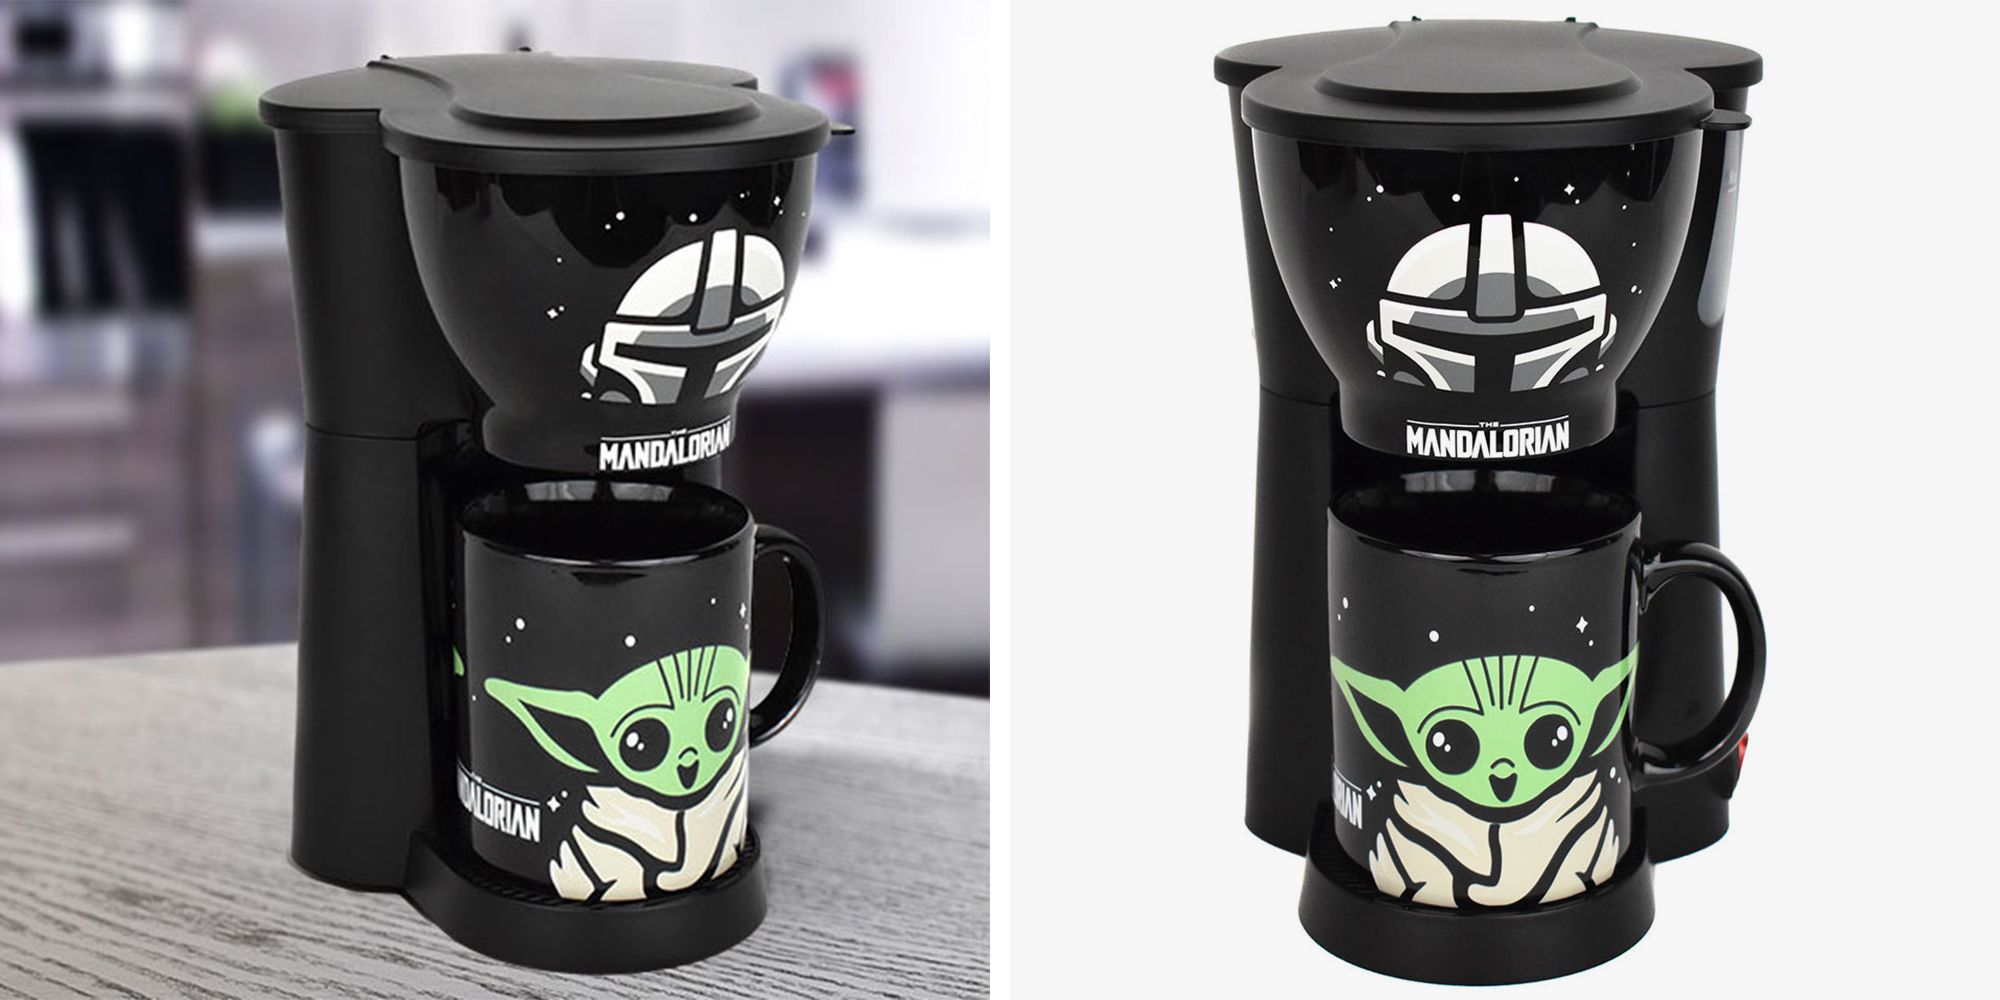 Uncanny Brands Star Wars Mandalorian Grogu Mug Warmer with Molded Mug